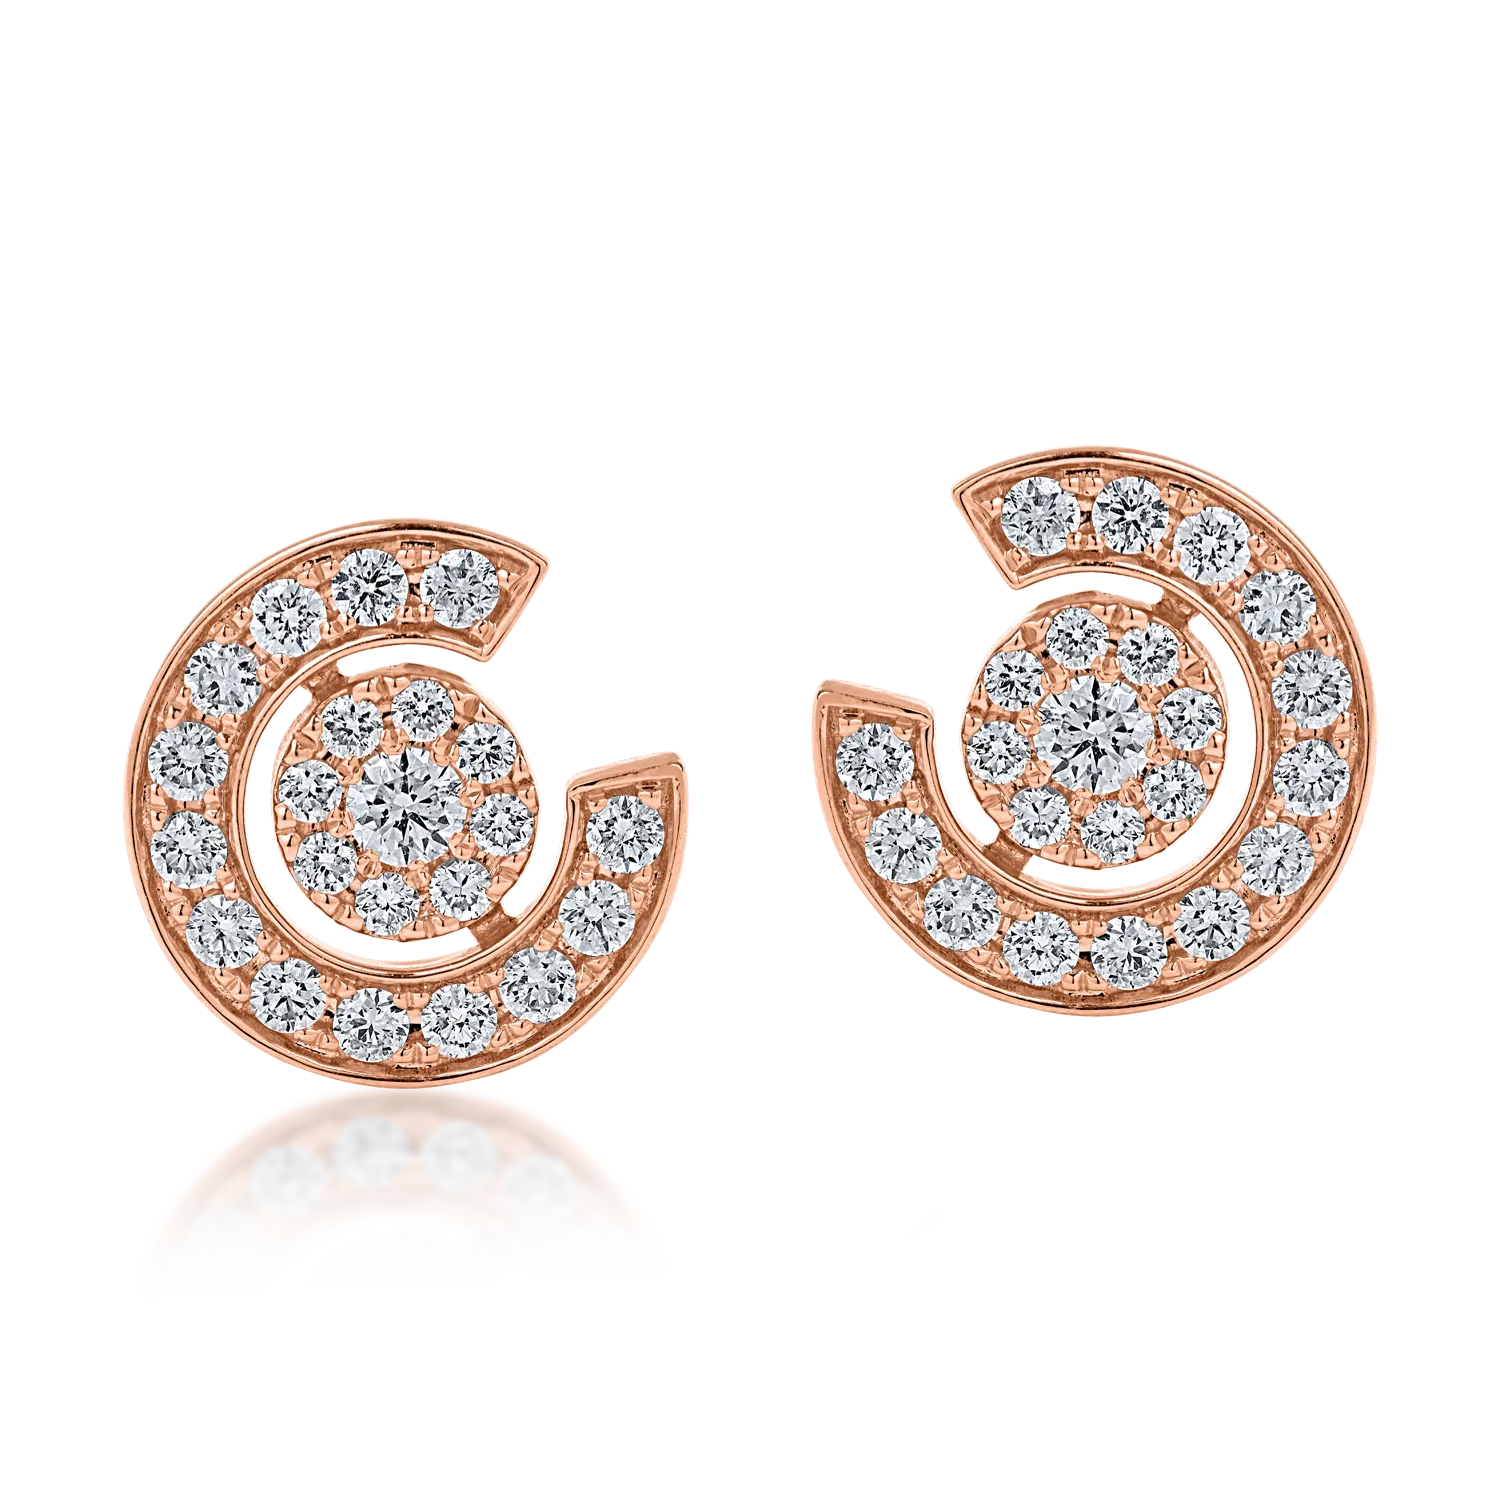 Rose gold geometric earrings with 0.9ct diamonds